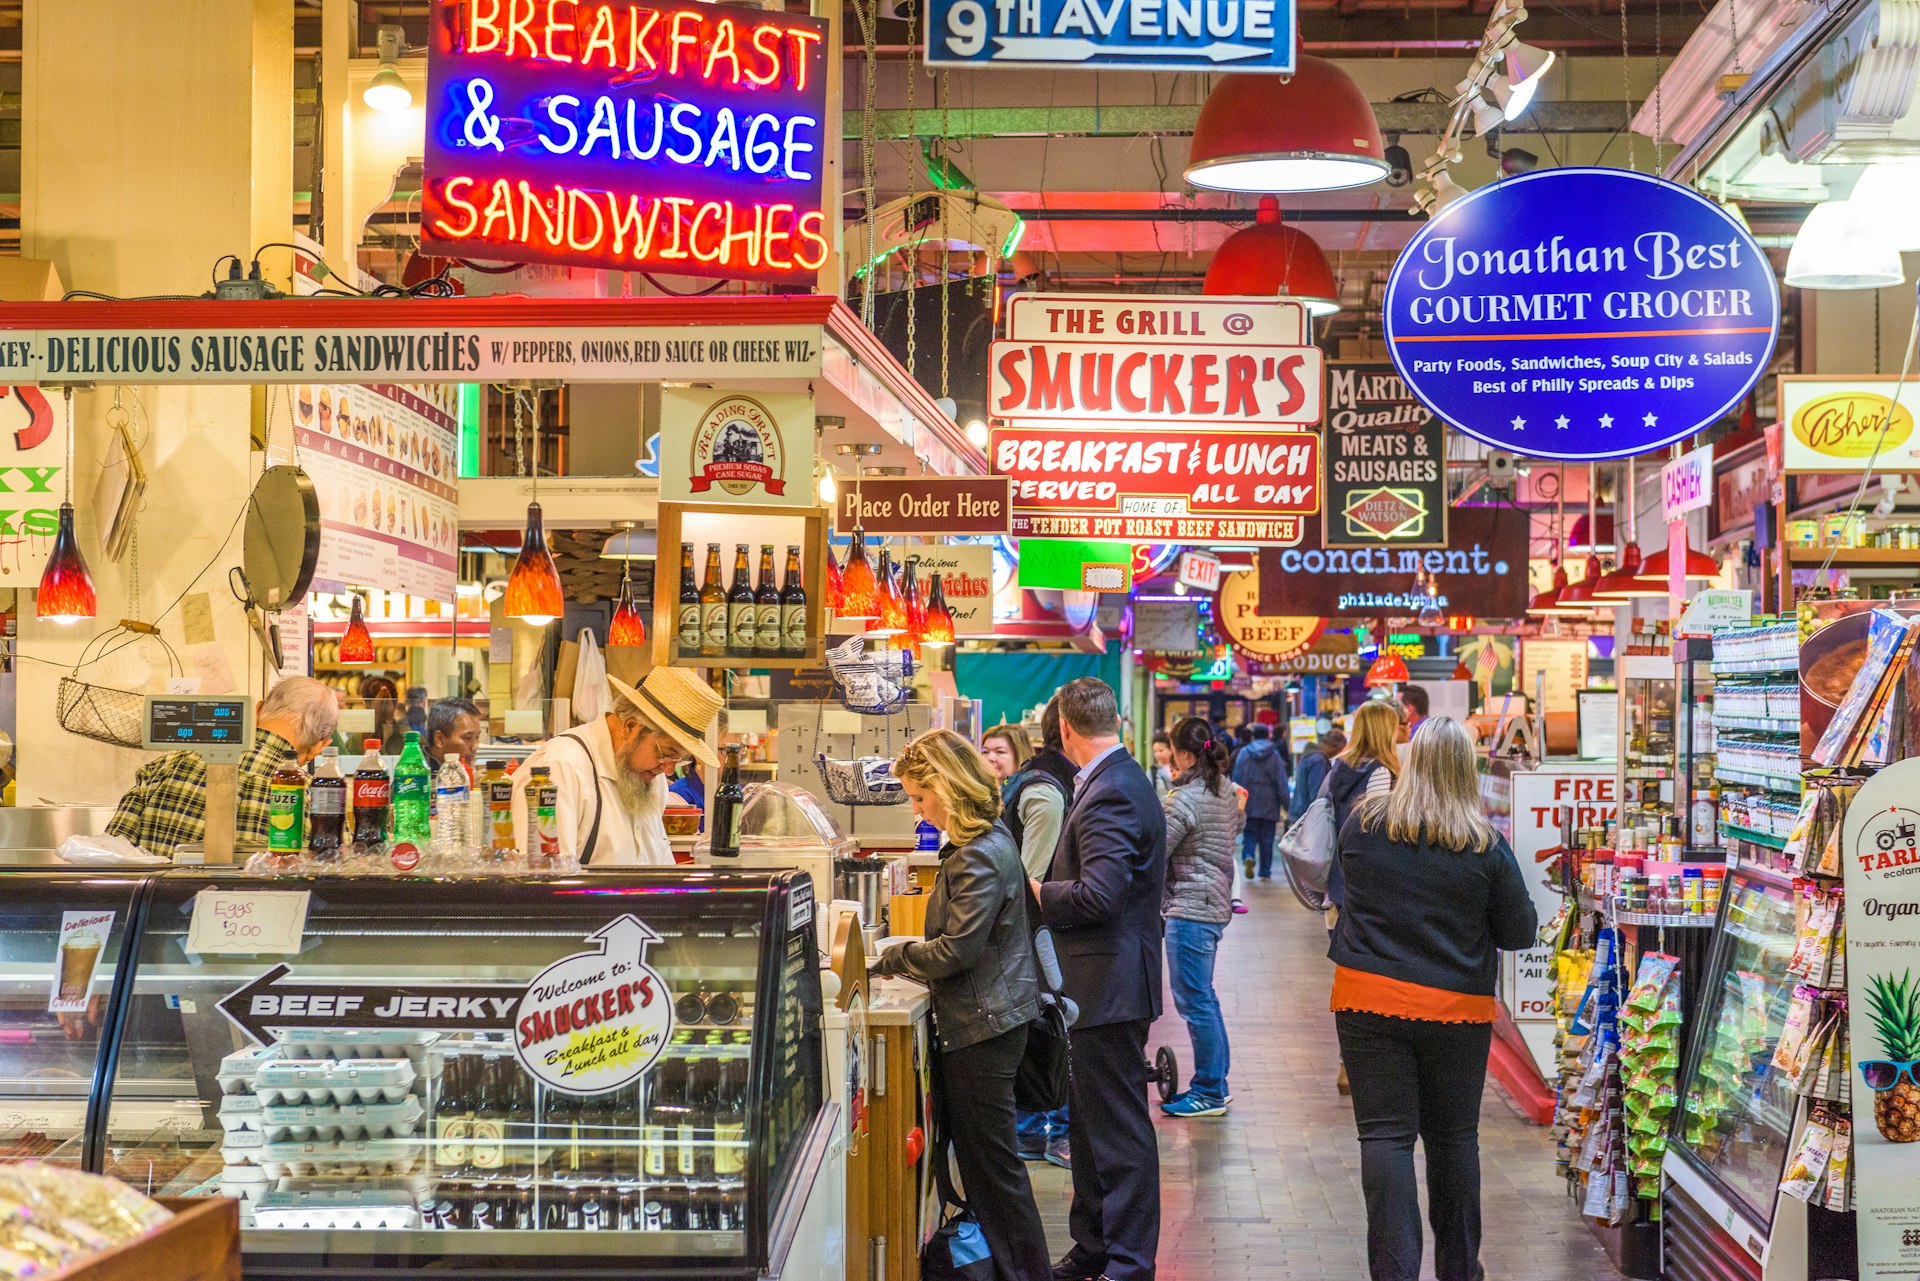 Customers shopping at Reading Terminal Market in Philadelphia